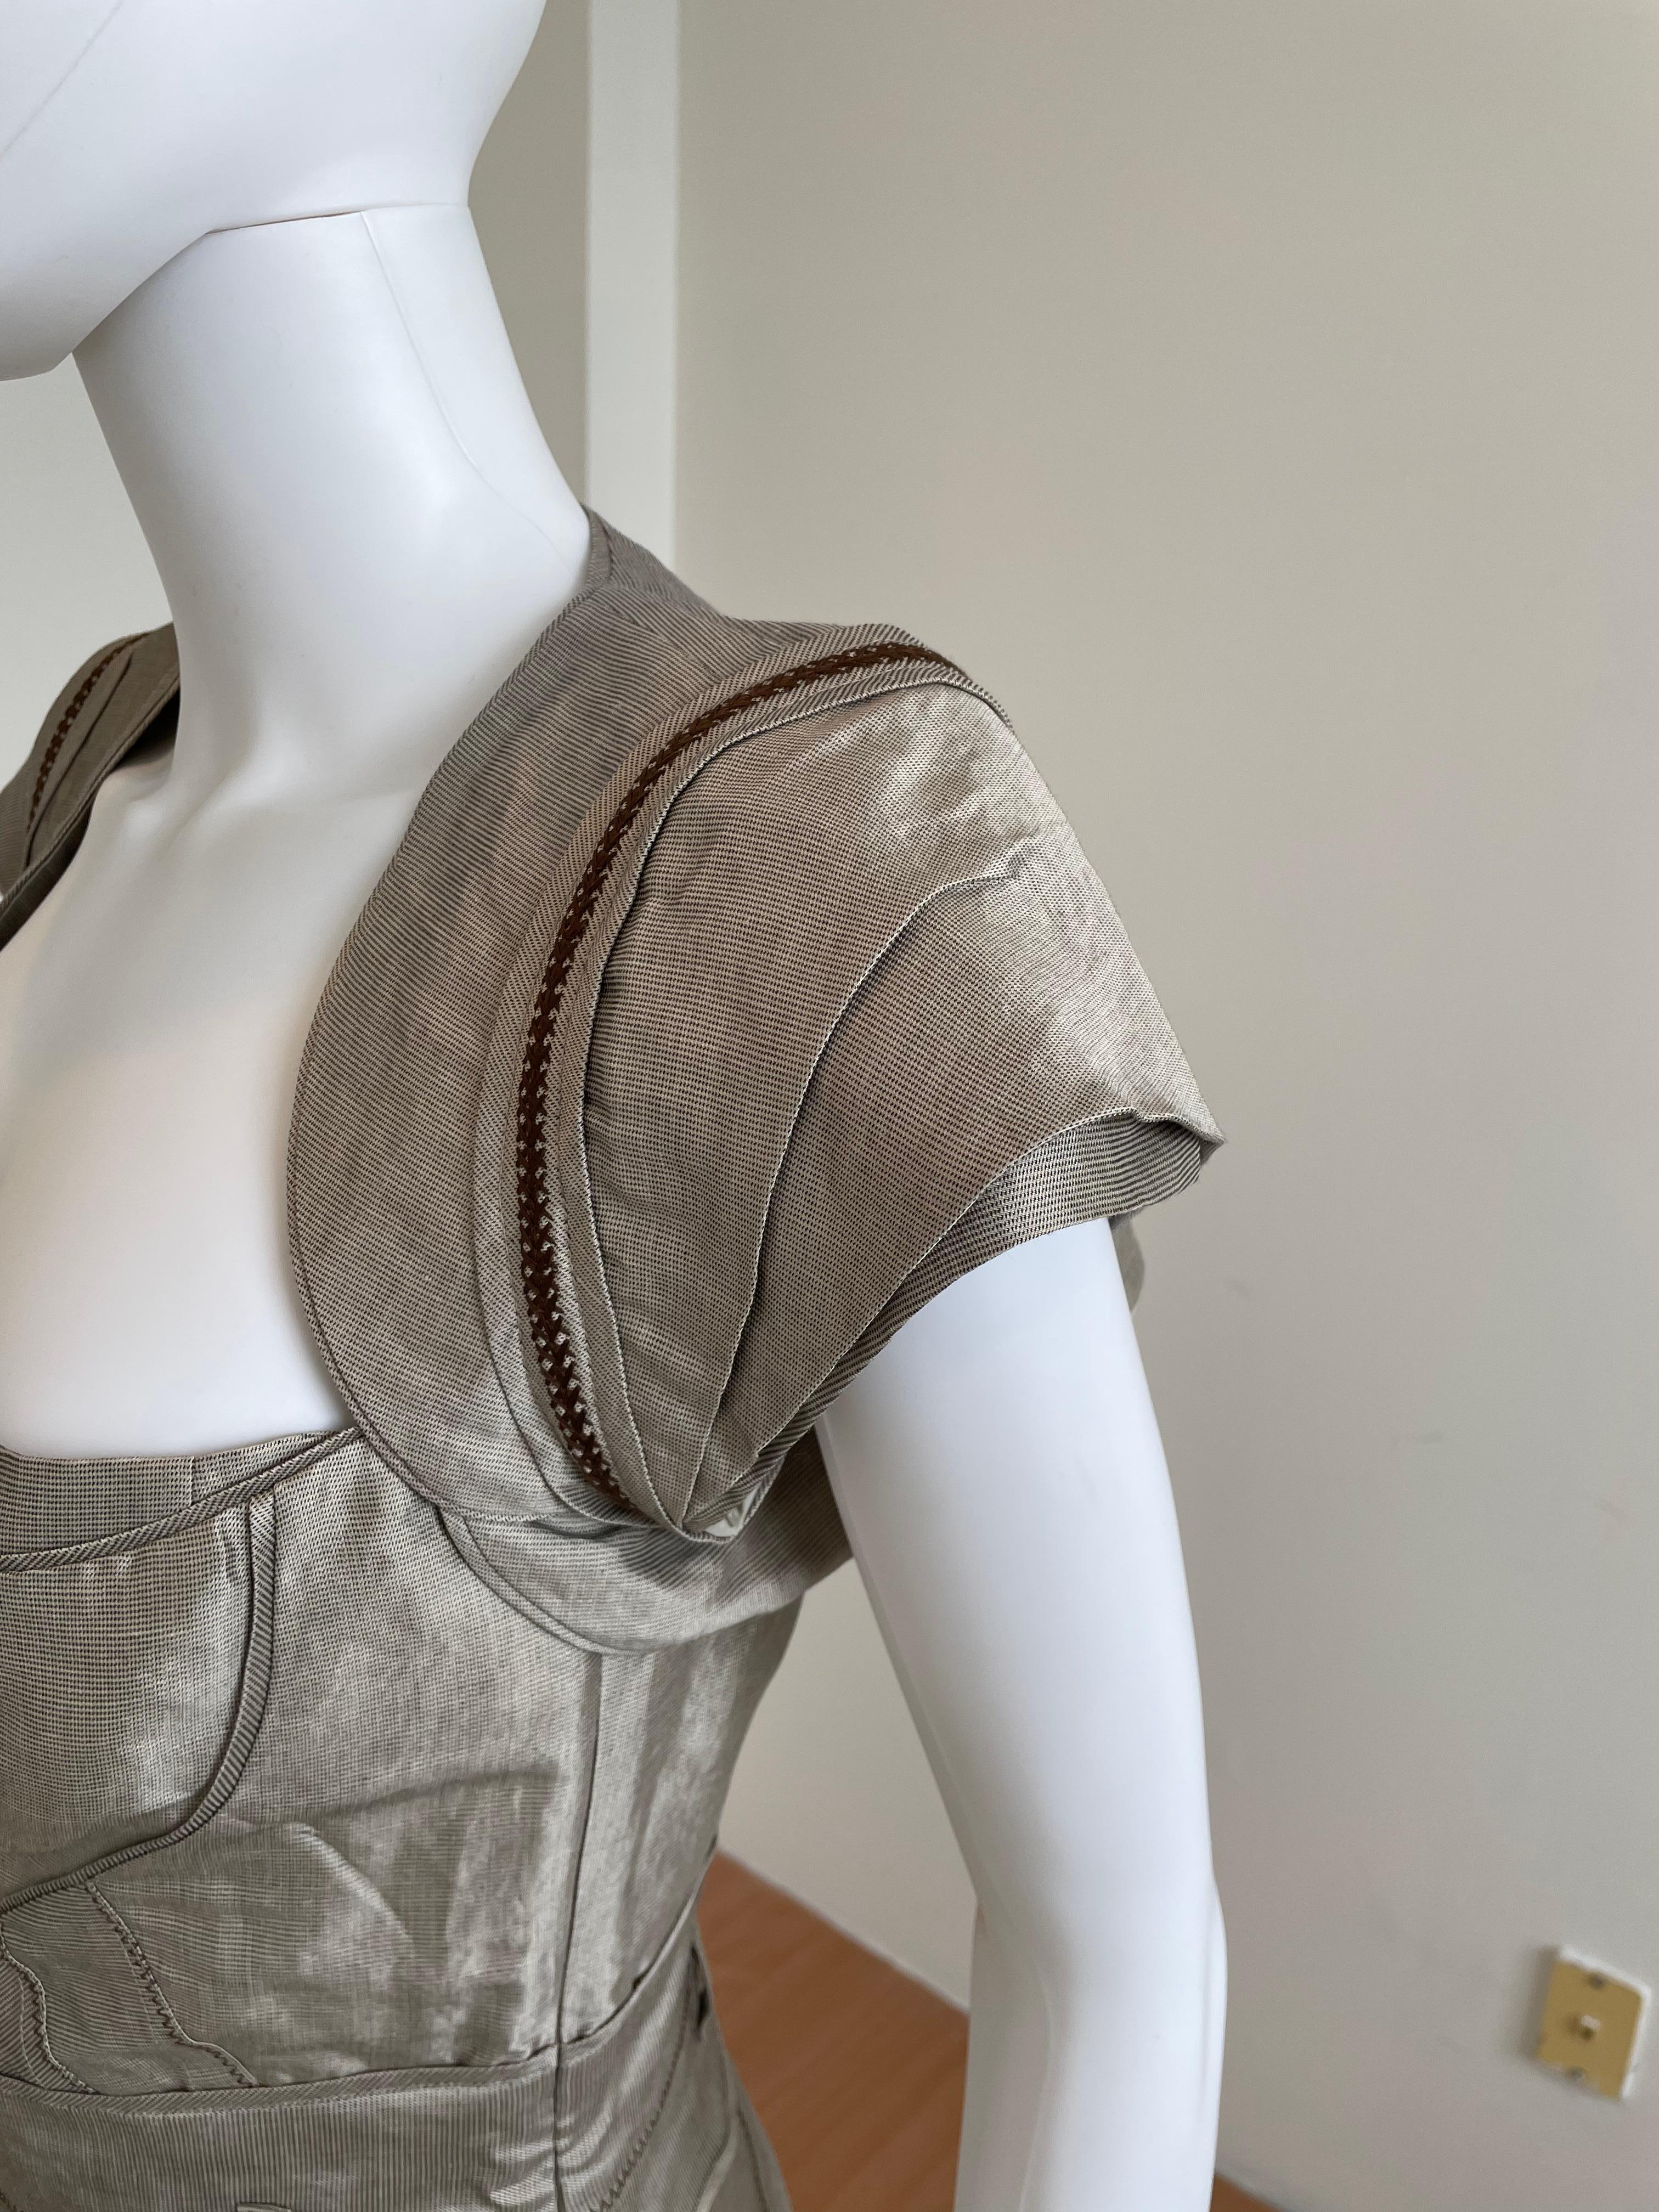 Antonio Berardi Structured Dress with Matching Caplet For Sale 2